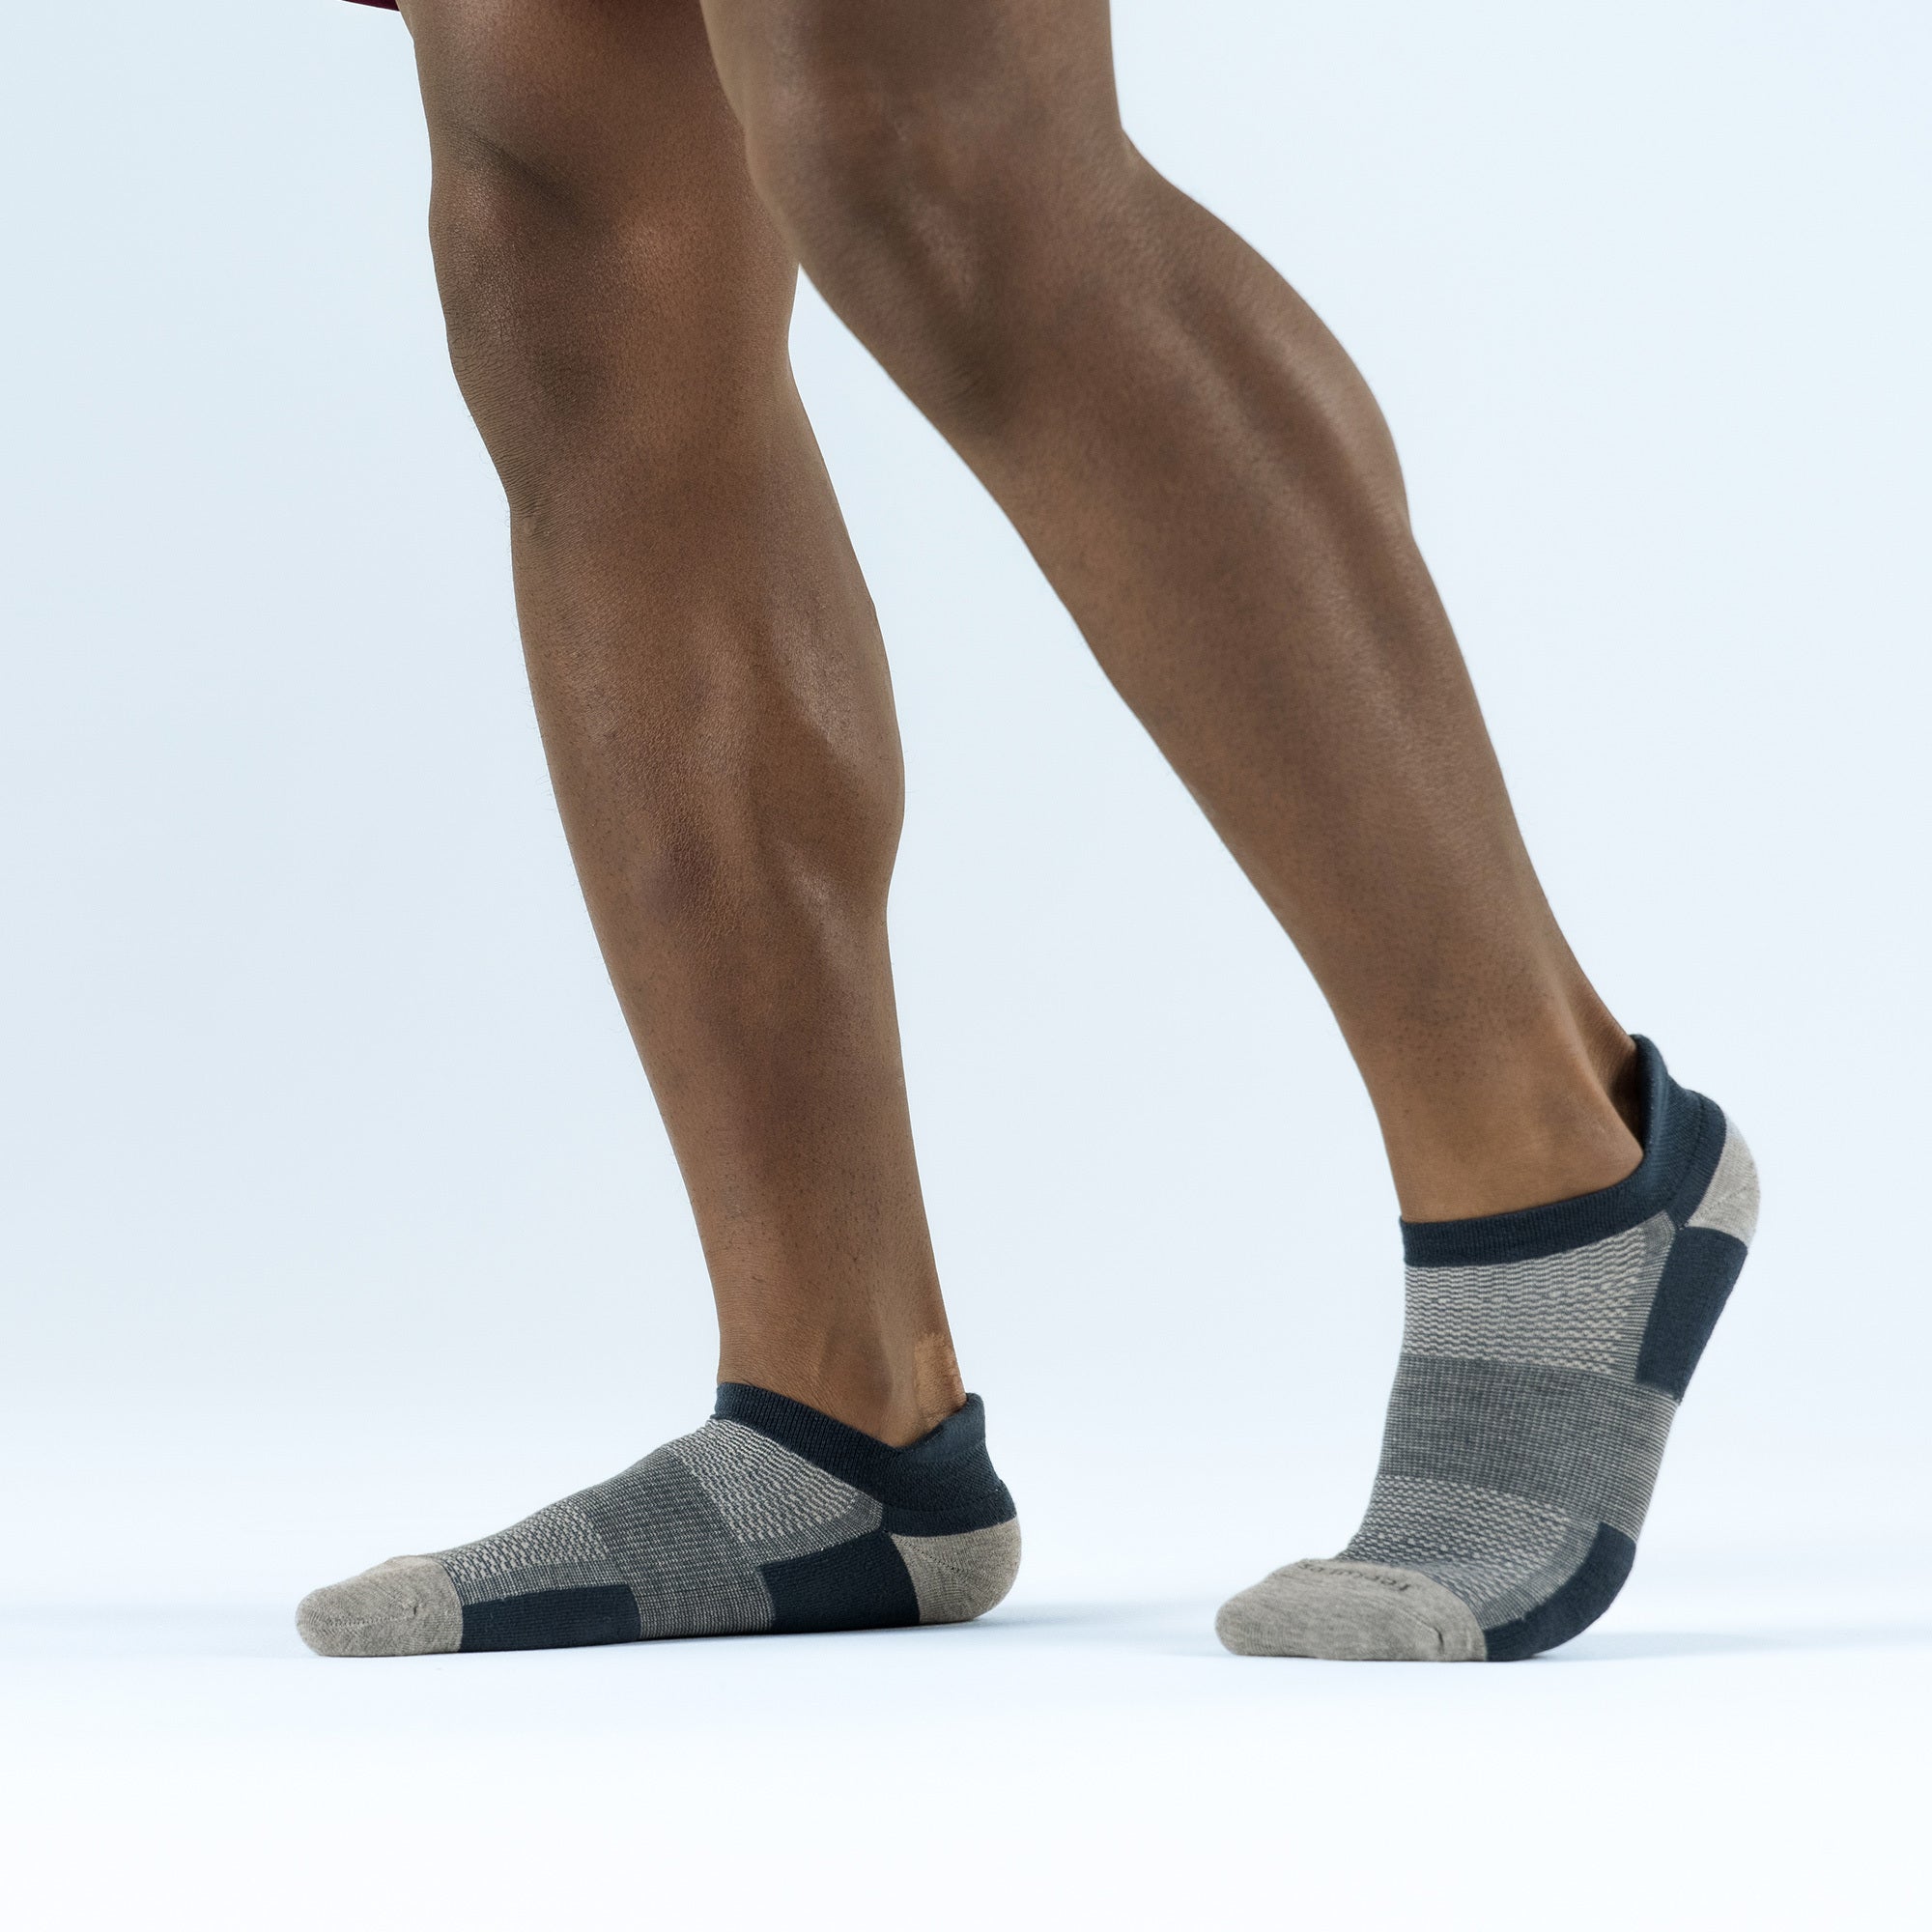 Wel-max Men's 3-Pack Non-Binding Cushion Socks